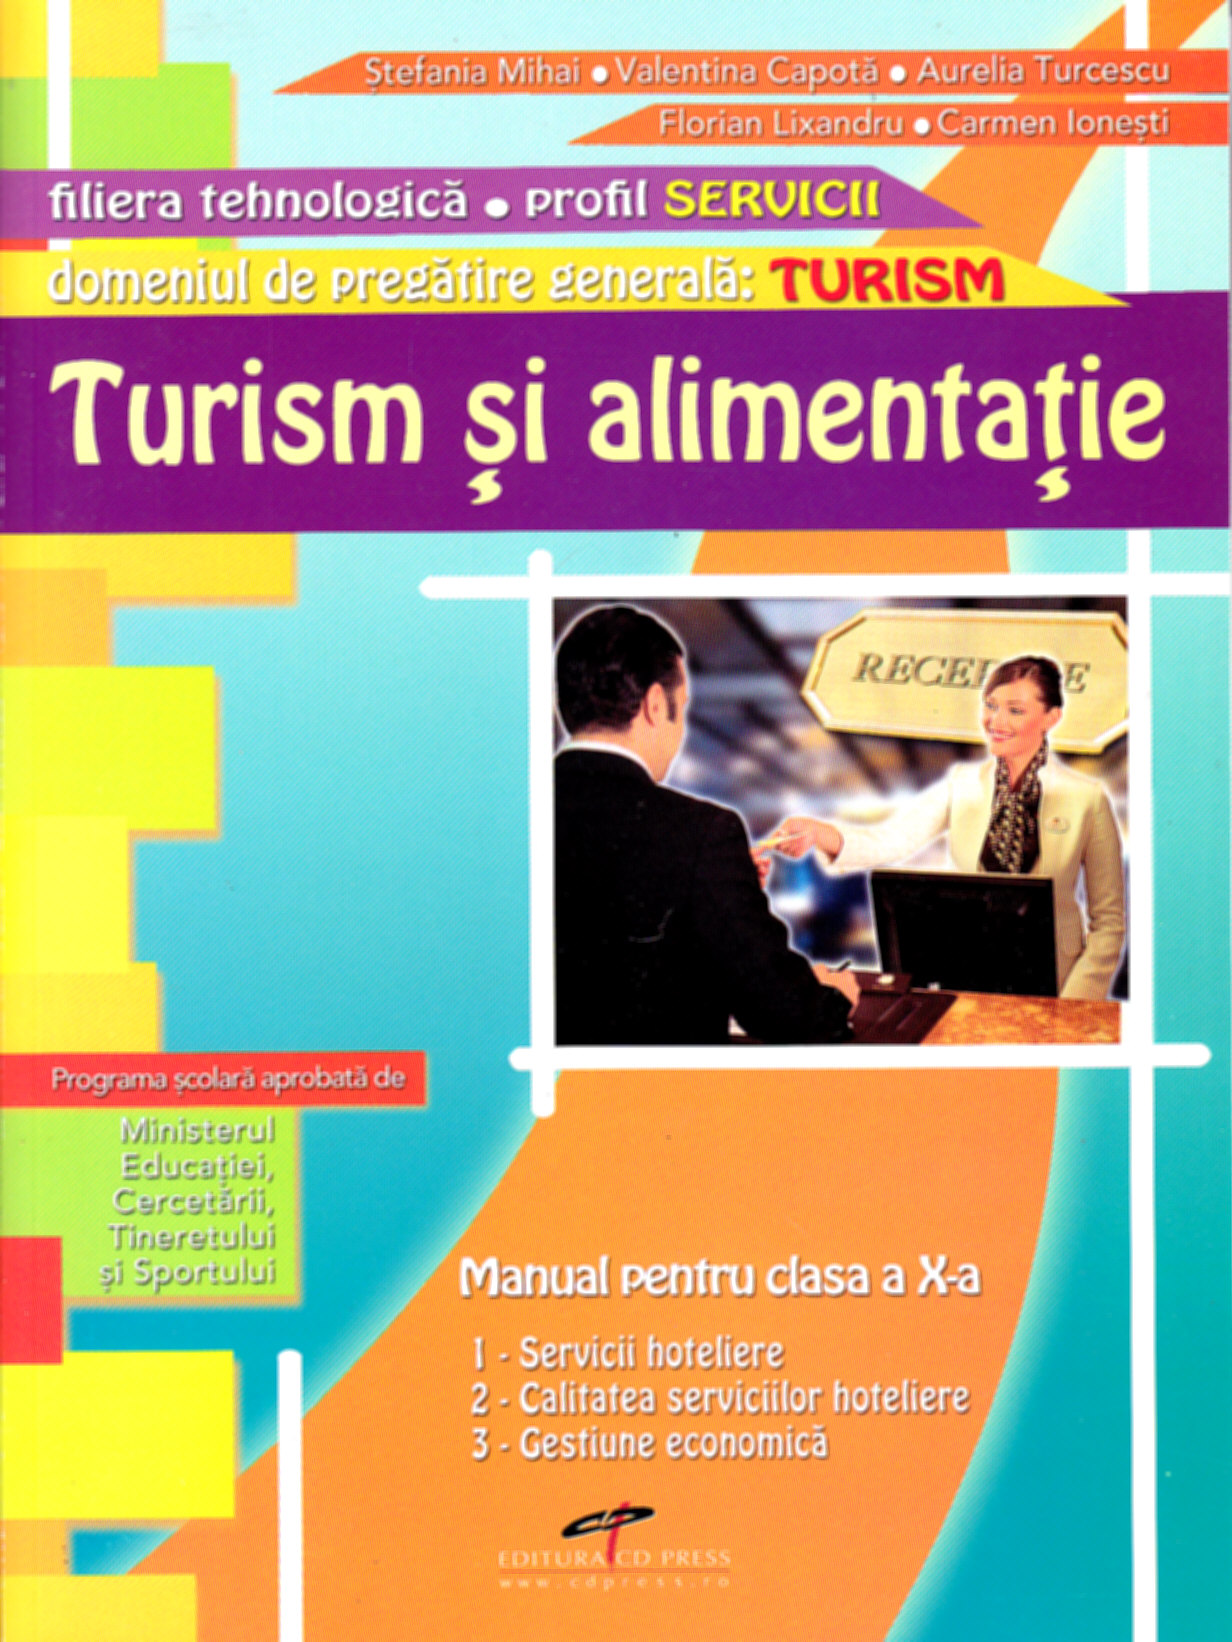 Turism si alimentatie clasa 10 domeniul turism - Stefania Mihai, Valentina Capota, Aurelia Turcescu